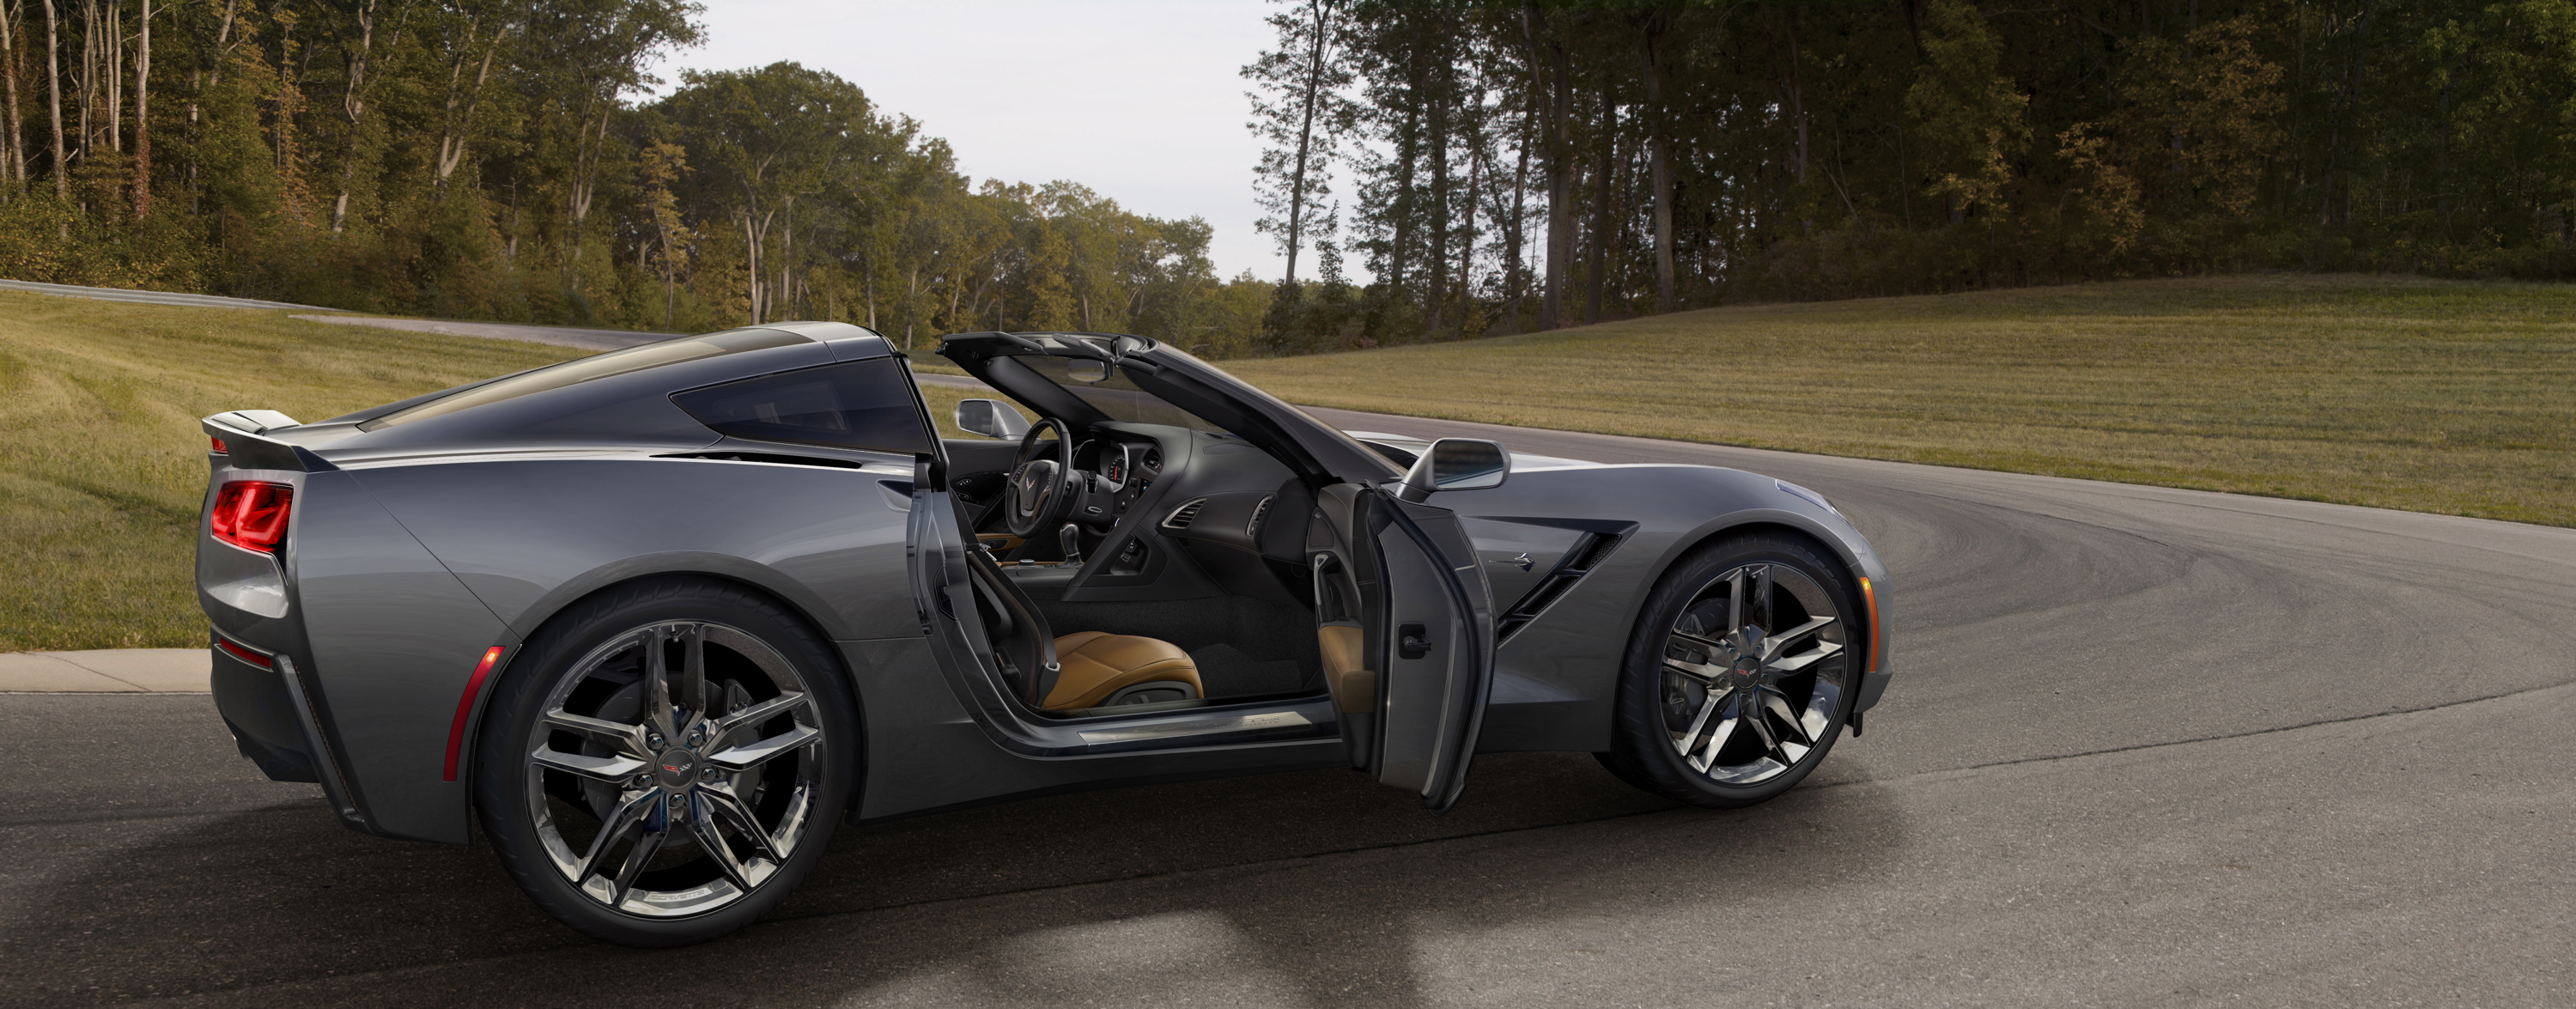 2014, Chevrolet, Corvette, Stingray, Supercar, Charcoal Wallpaper